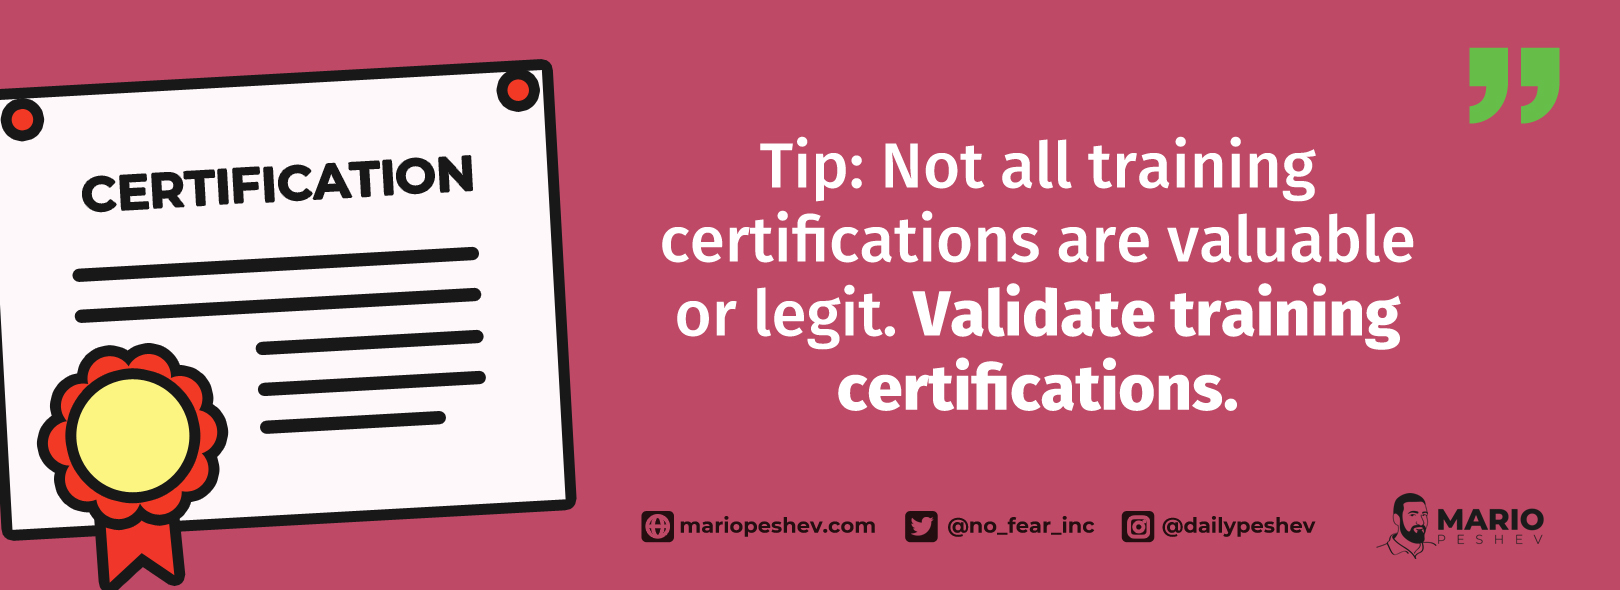 validating training certifications